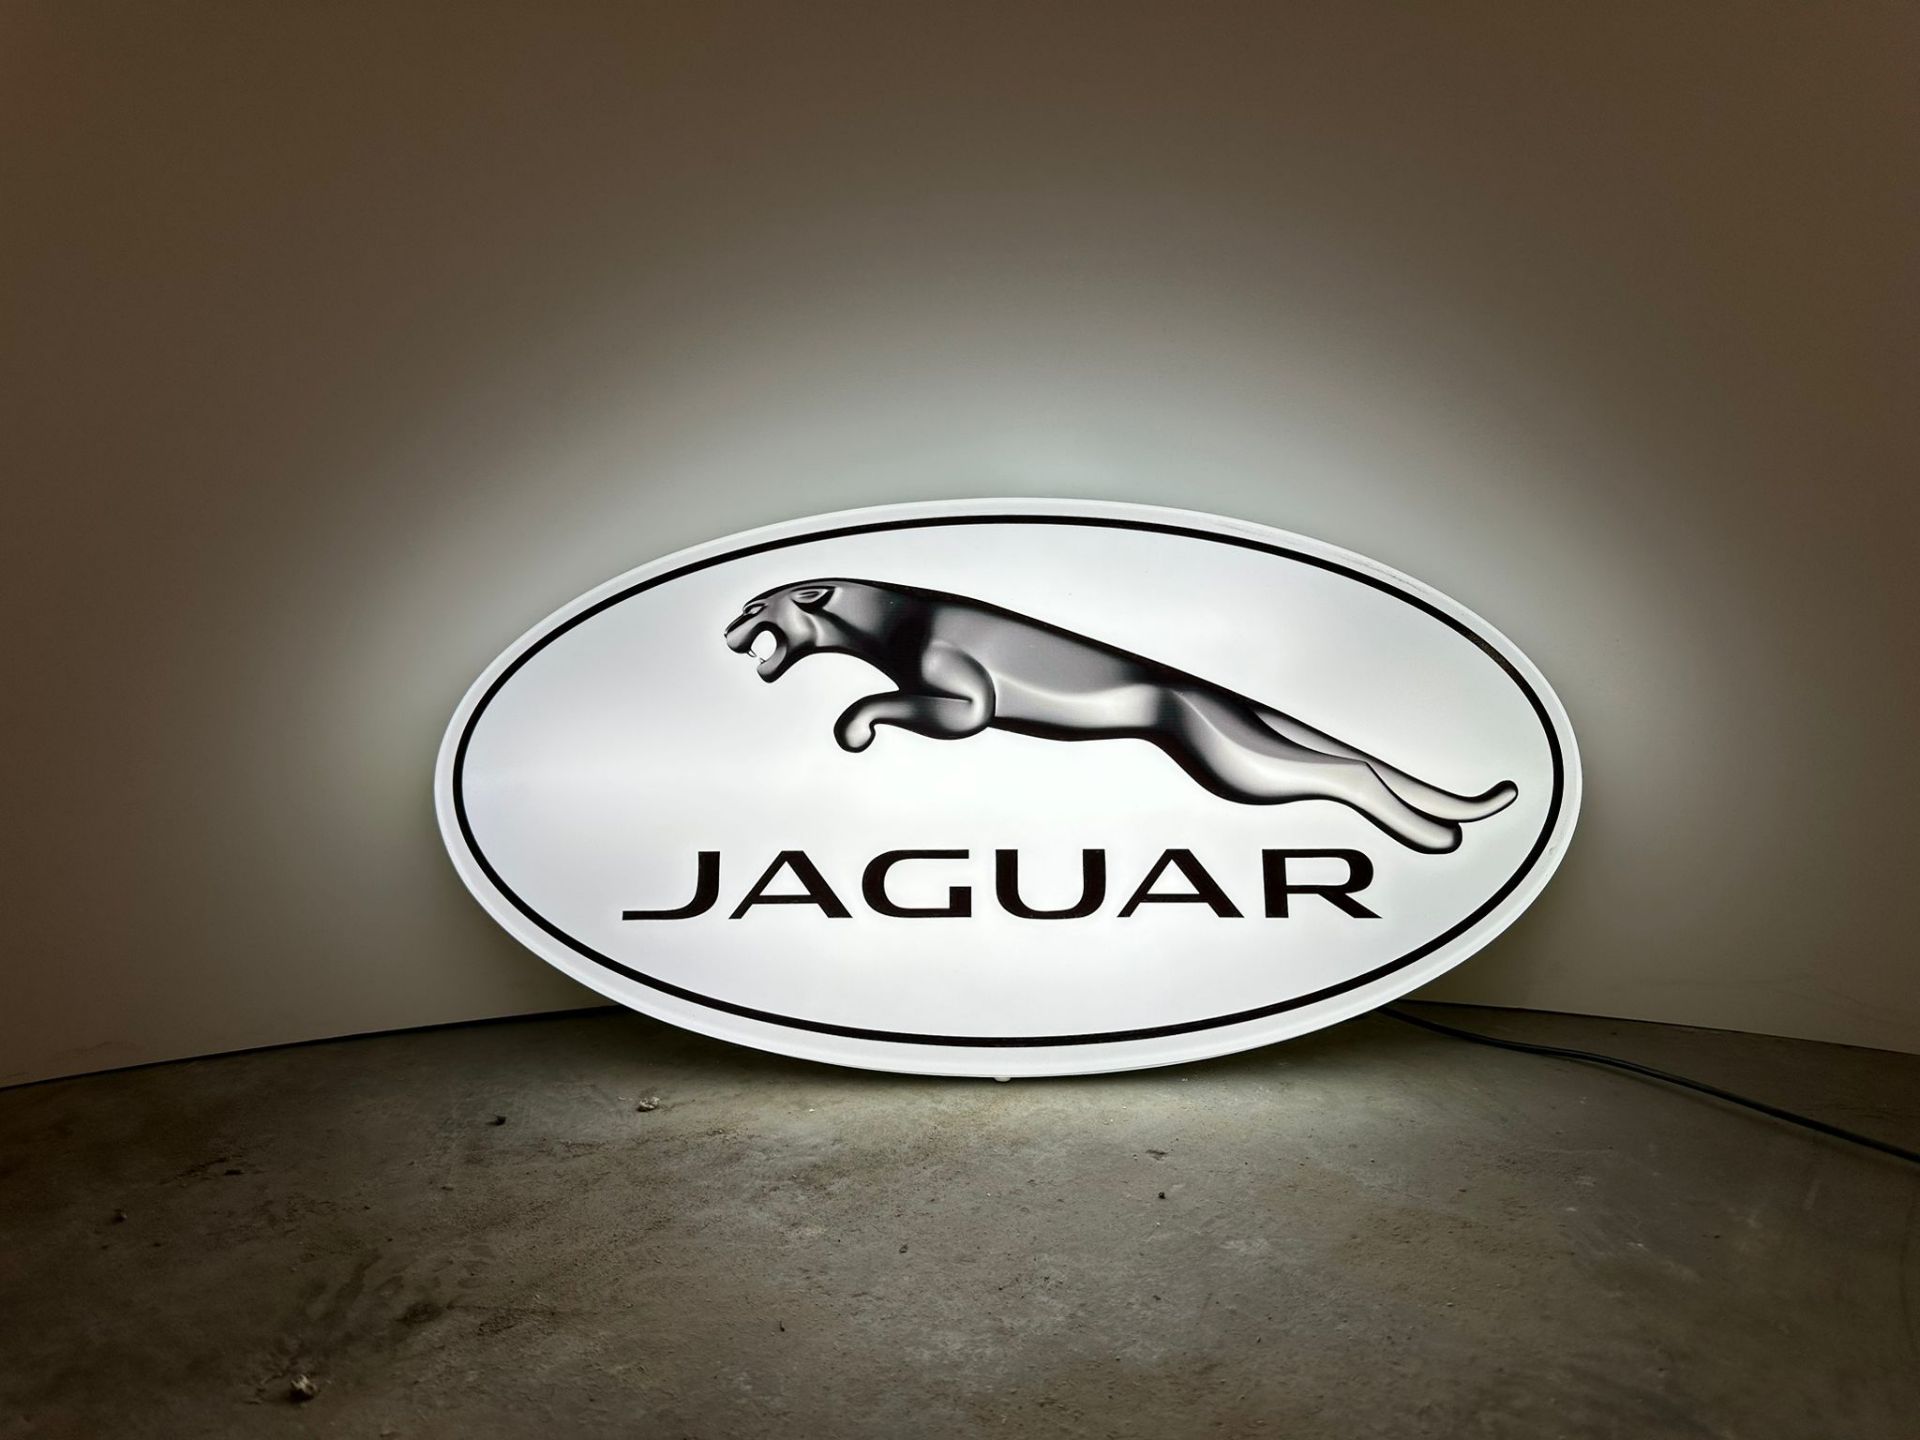 jaguar sign illuminated - Image 4 of 4